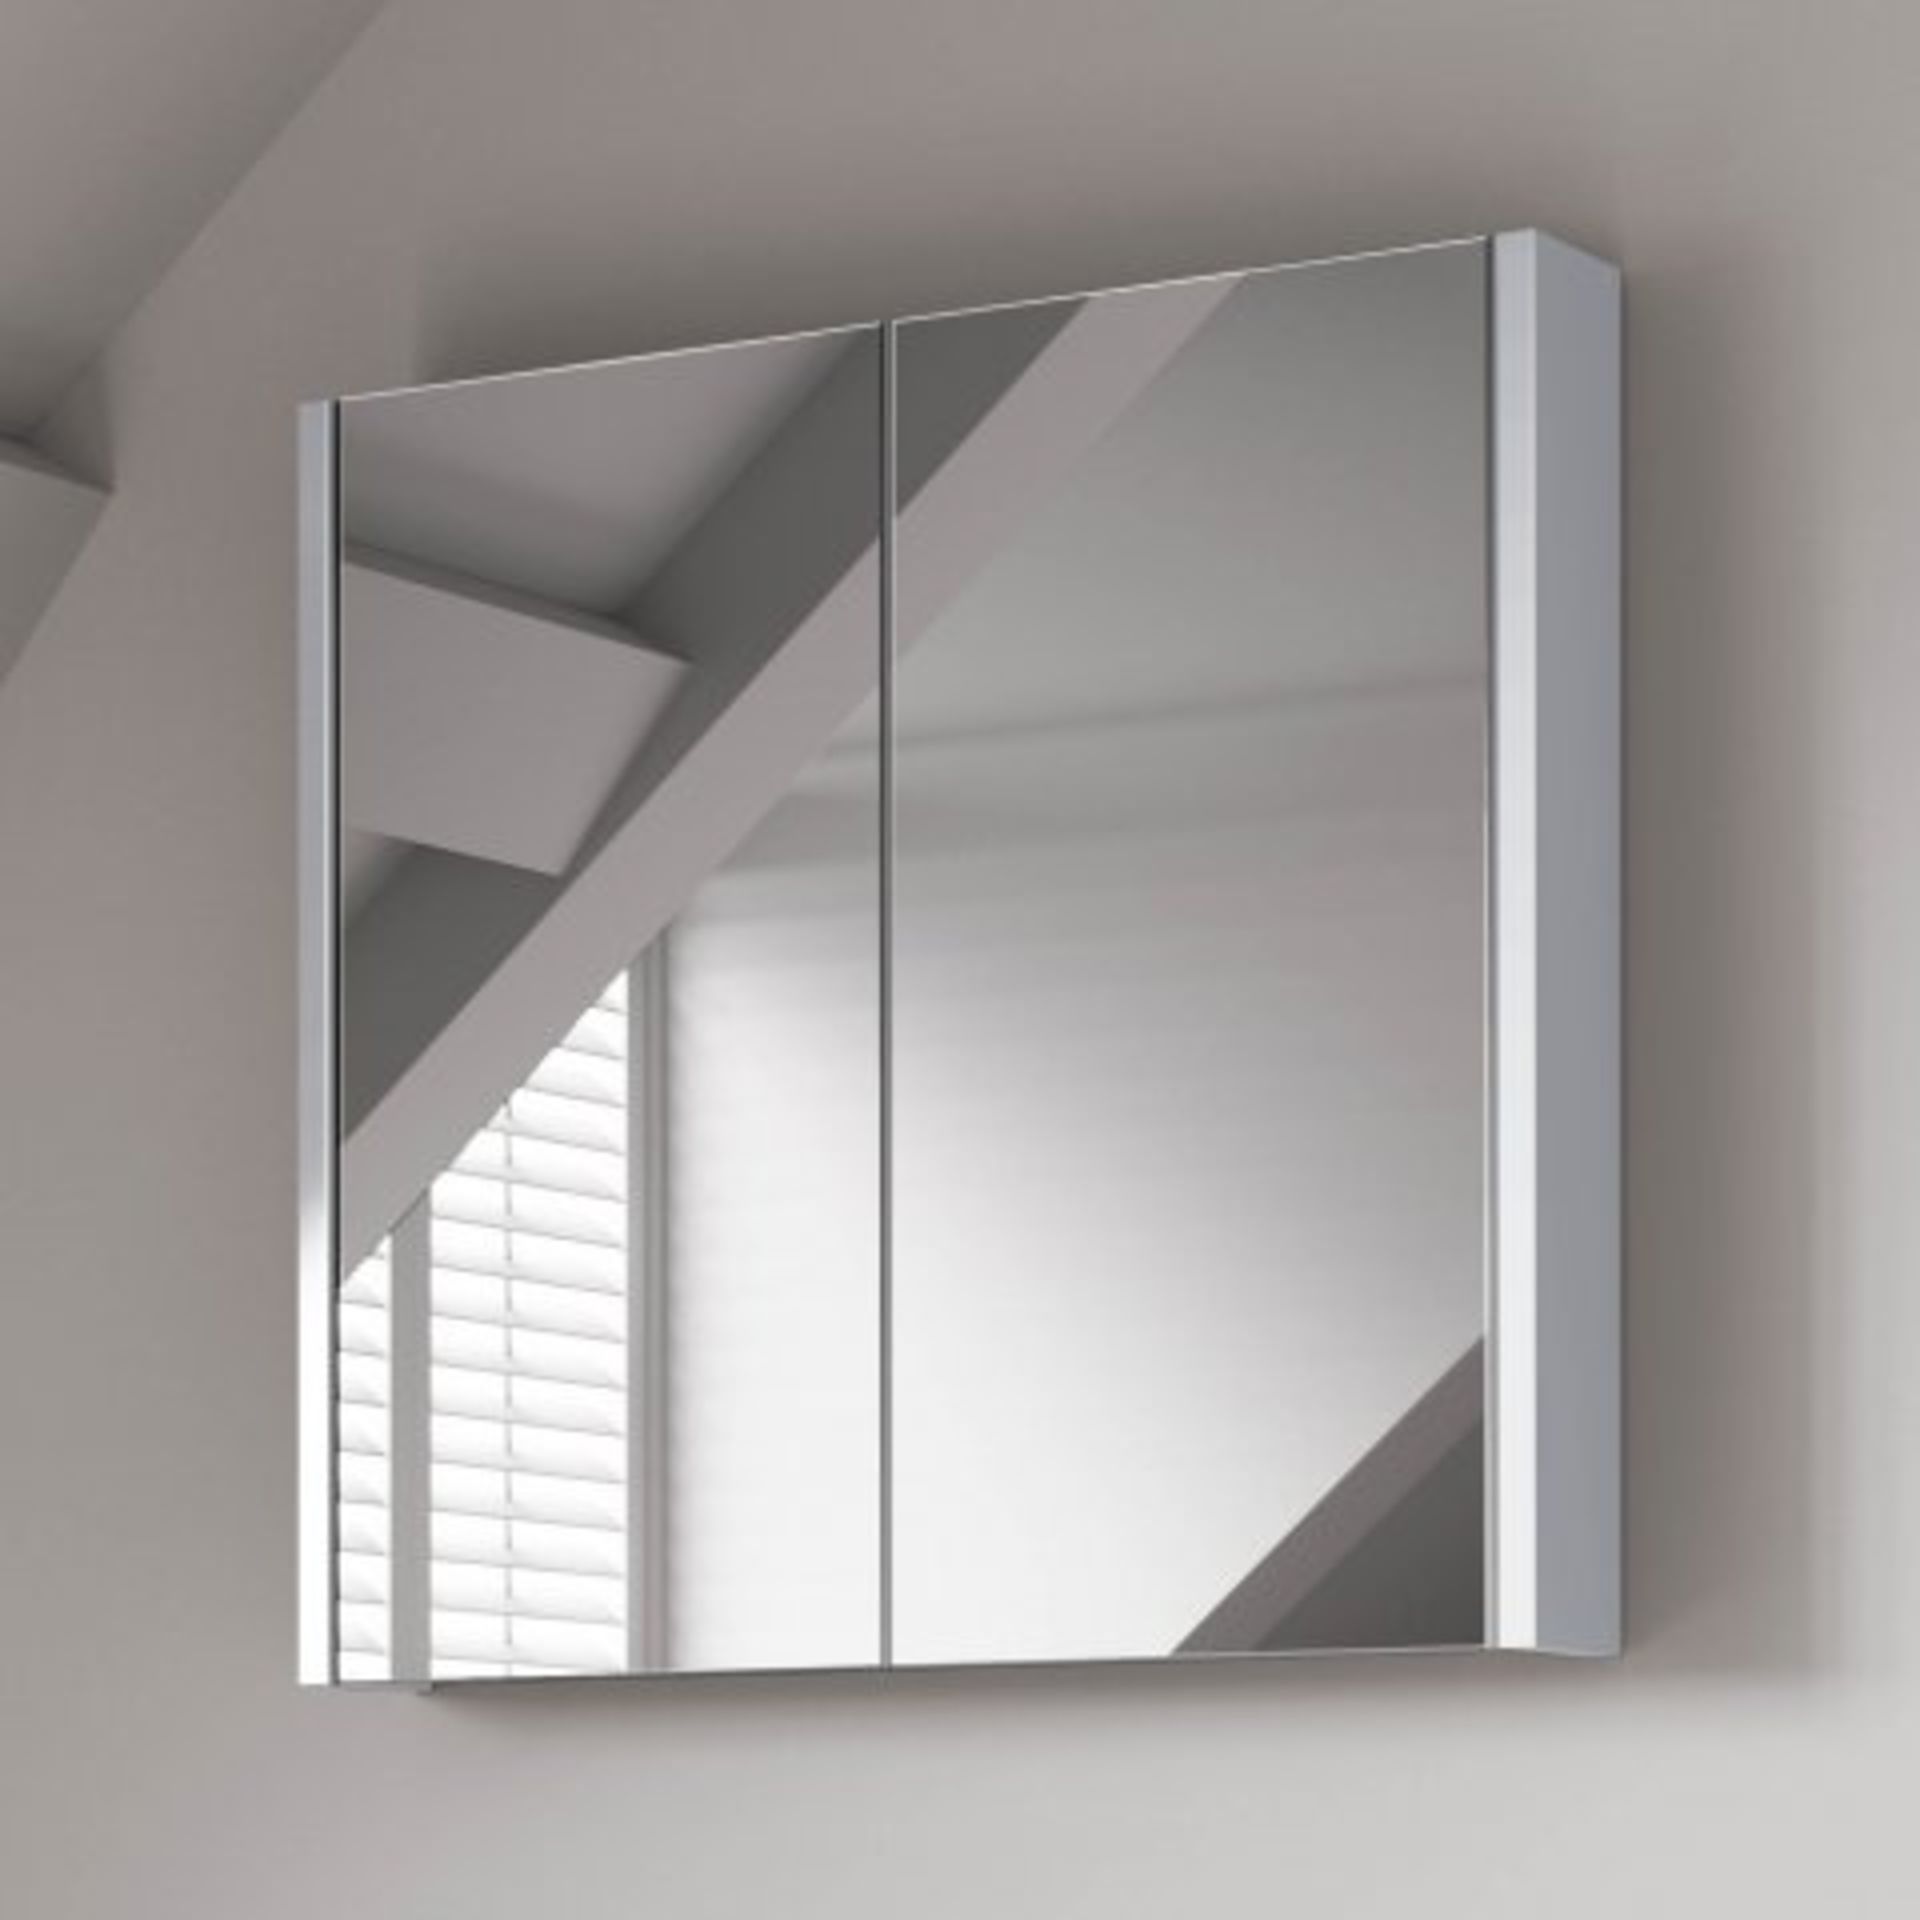 (W313) 600mm Gloss White Double Door Mirror Cabinet RRP £299.99. Our 600mm Gloss White Double Door